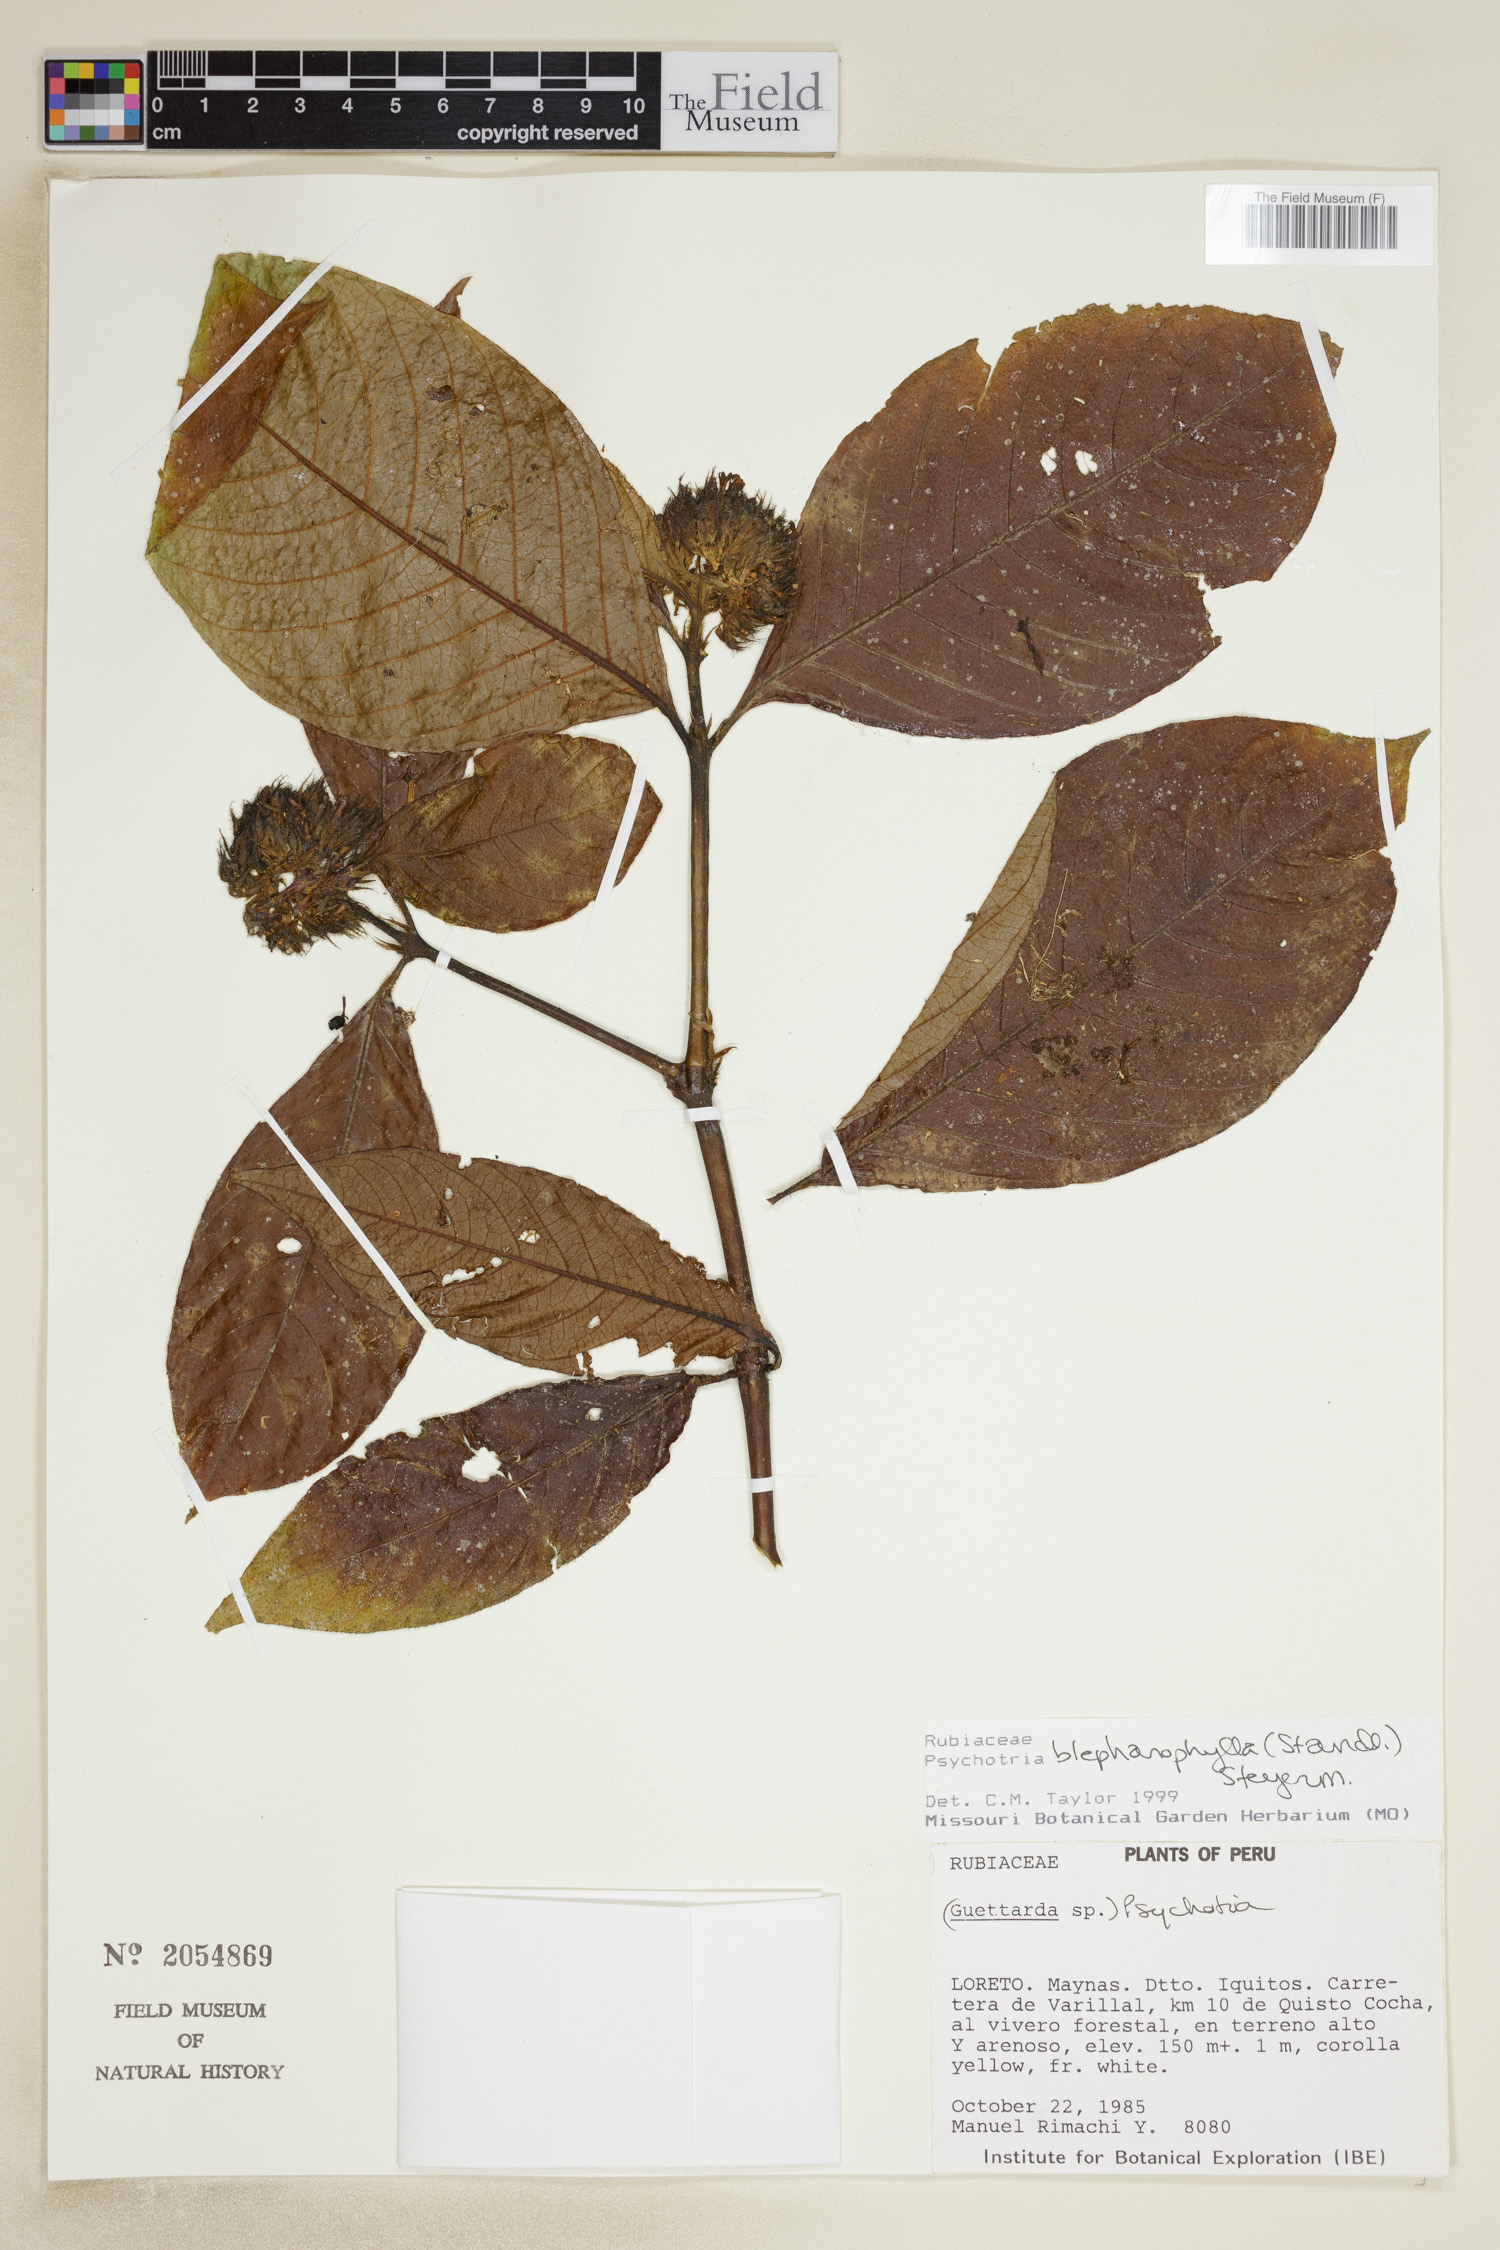 Psychotria blepharophylla image